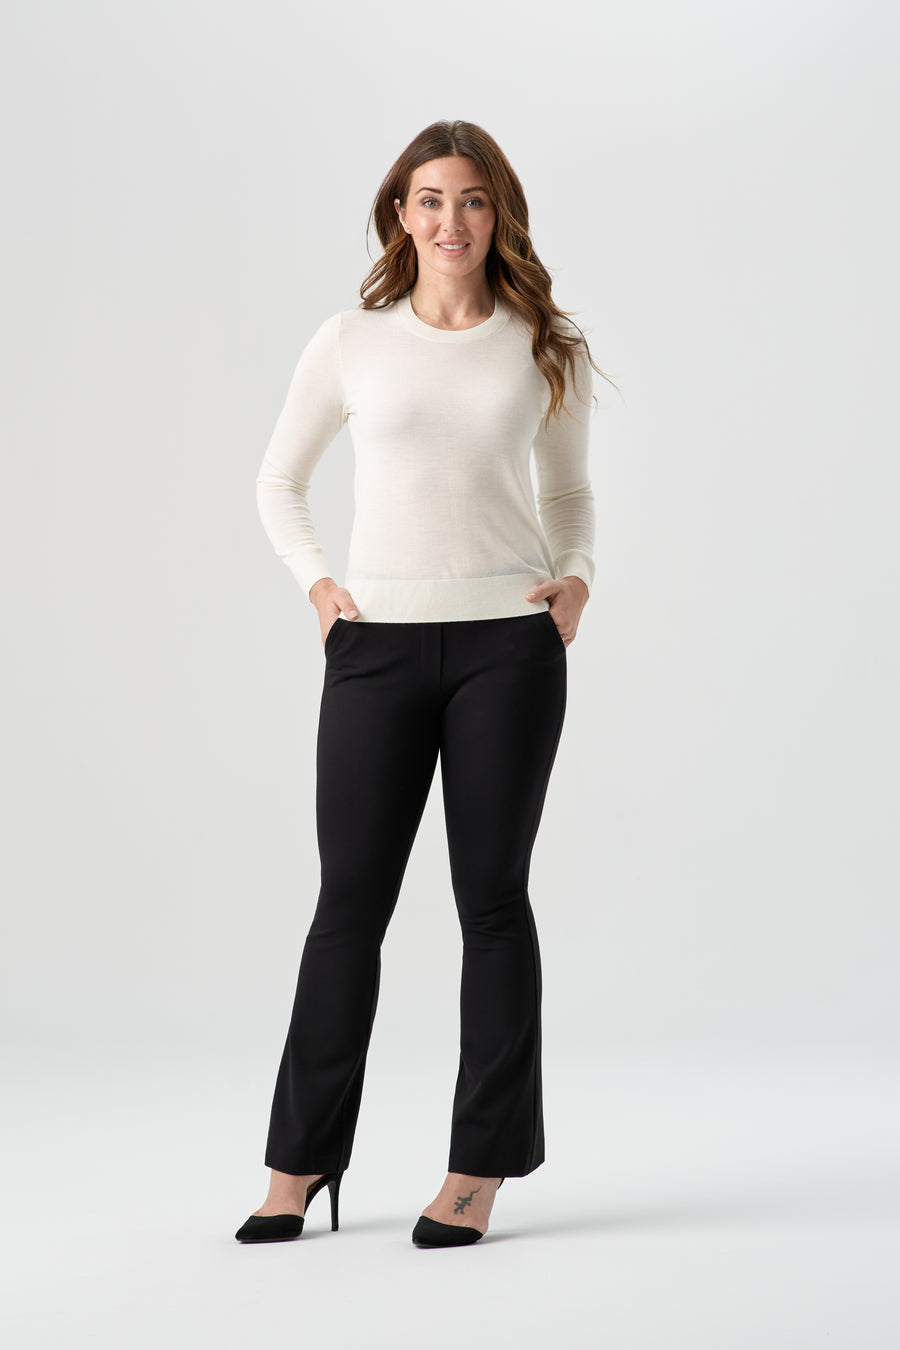 woman wearing white cardigan with black pants